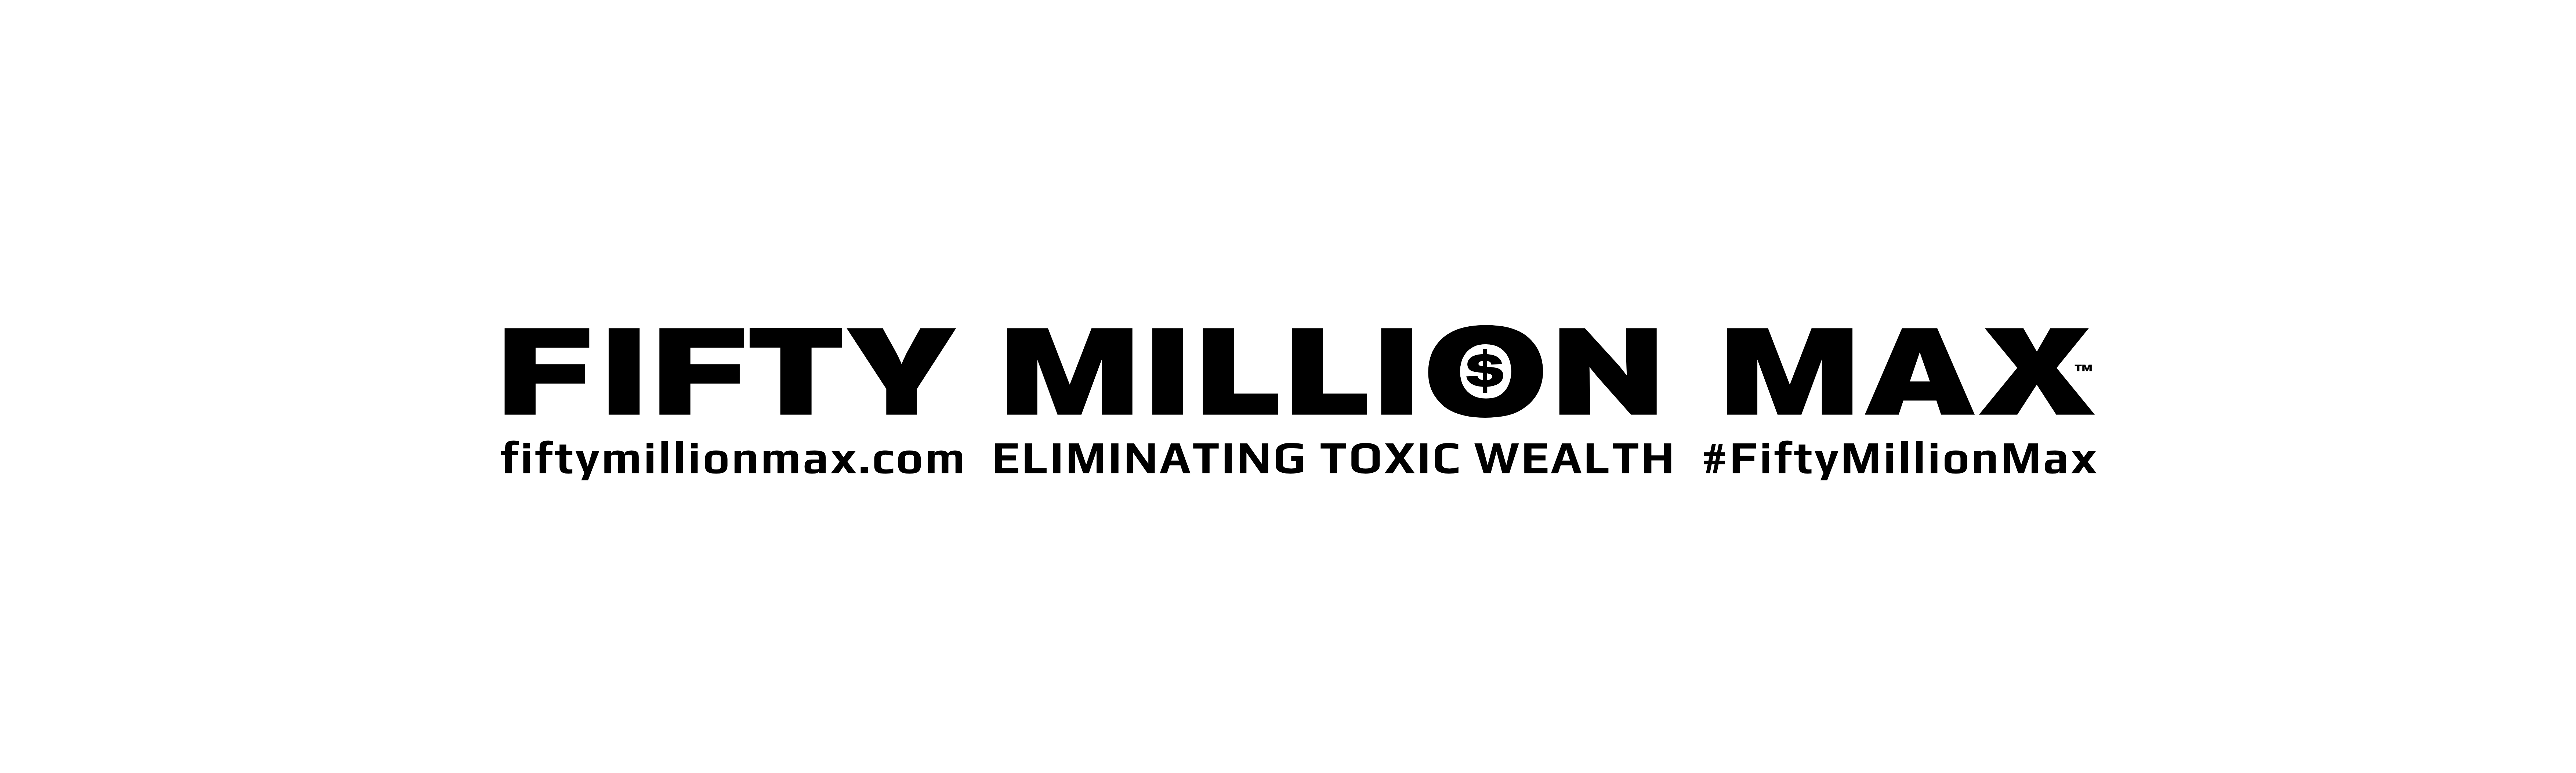 Fifty Million Max™ fiftymillionmax.com Line Logo (Black Text)